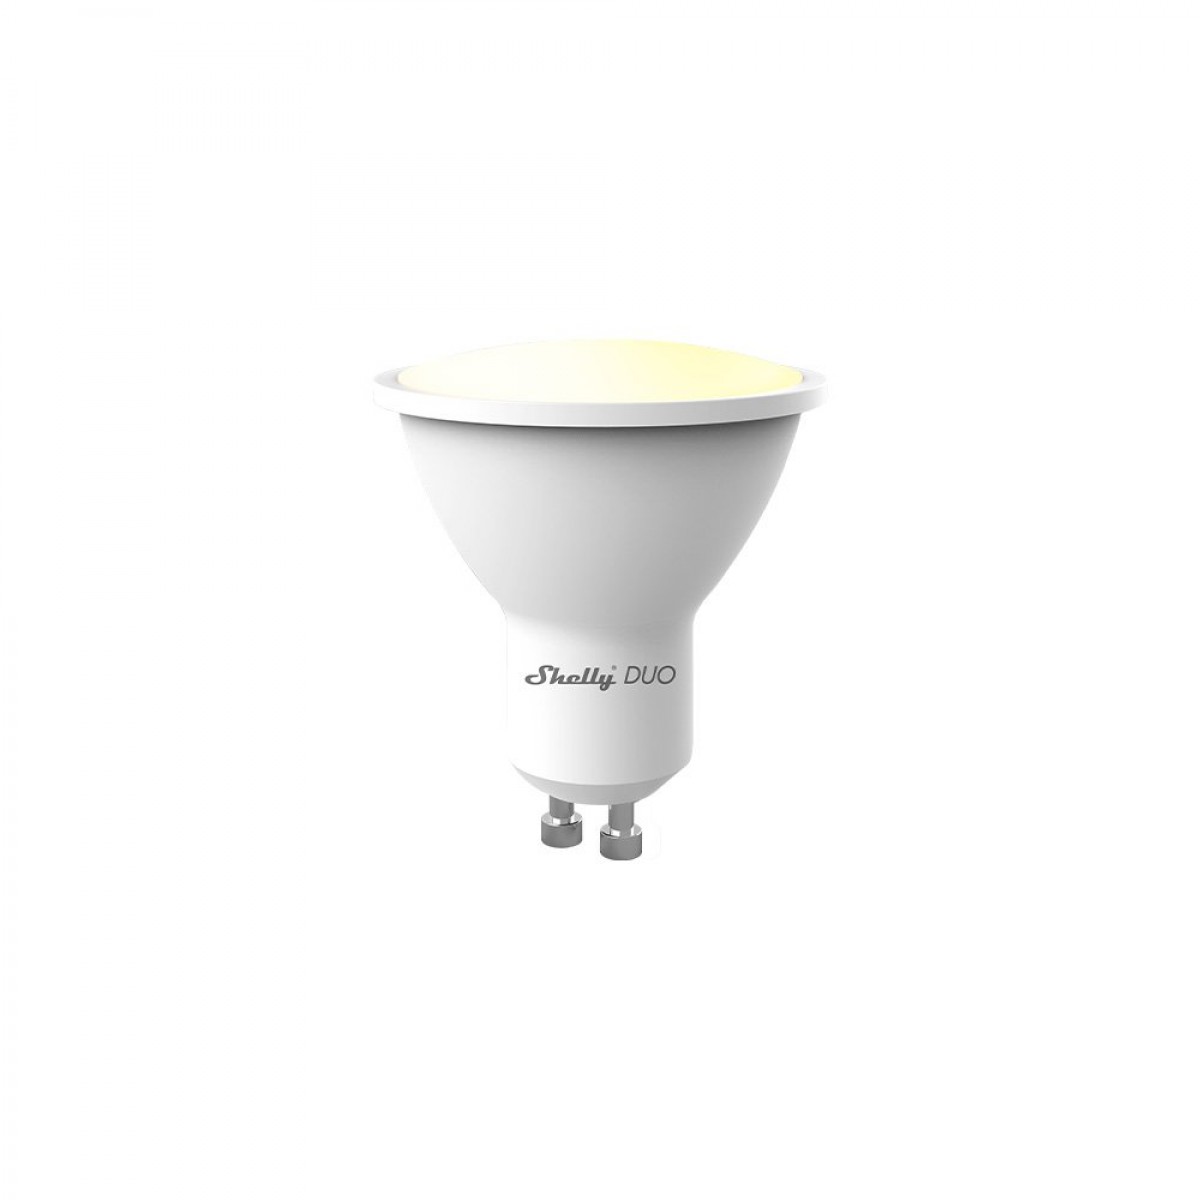 Shelly Duo WLAN LED Lampe, warmweiß + kaltweis, dimmbar, GU10 Sockel, 4,8 Watt, 2.700 K - 6.500 K